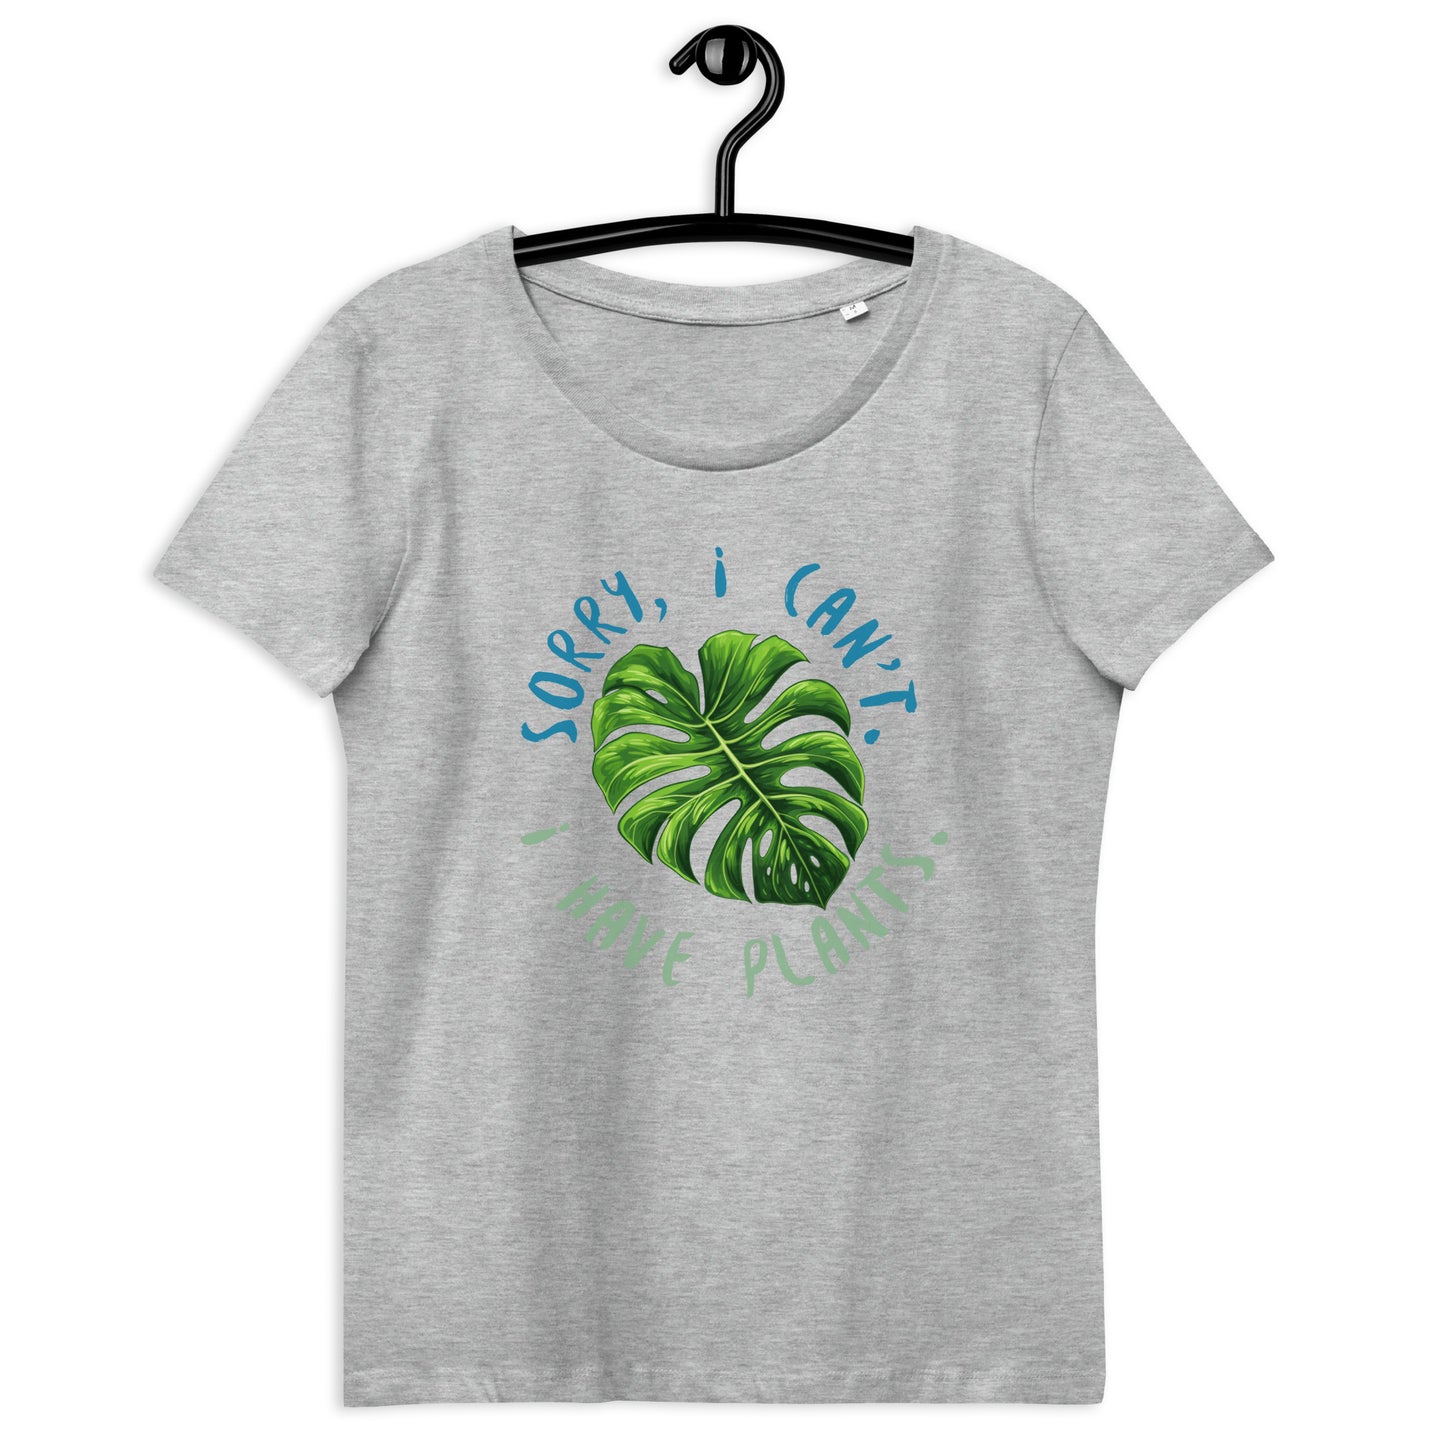 Naisten t-paita peikonlehti "I have plants"